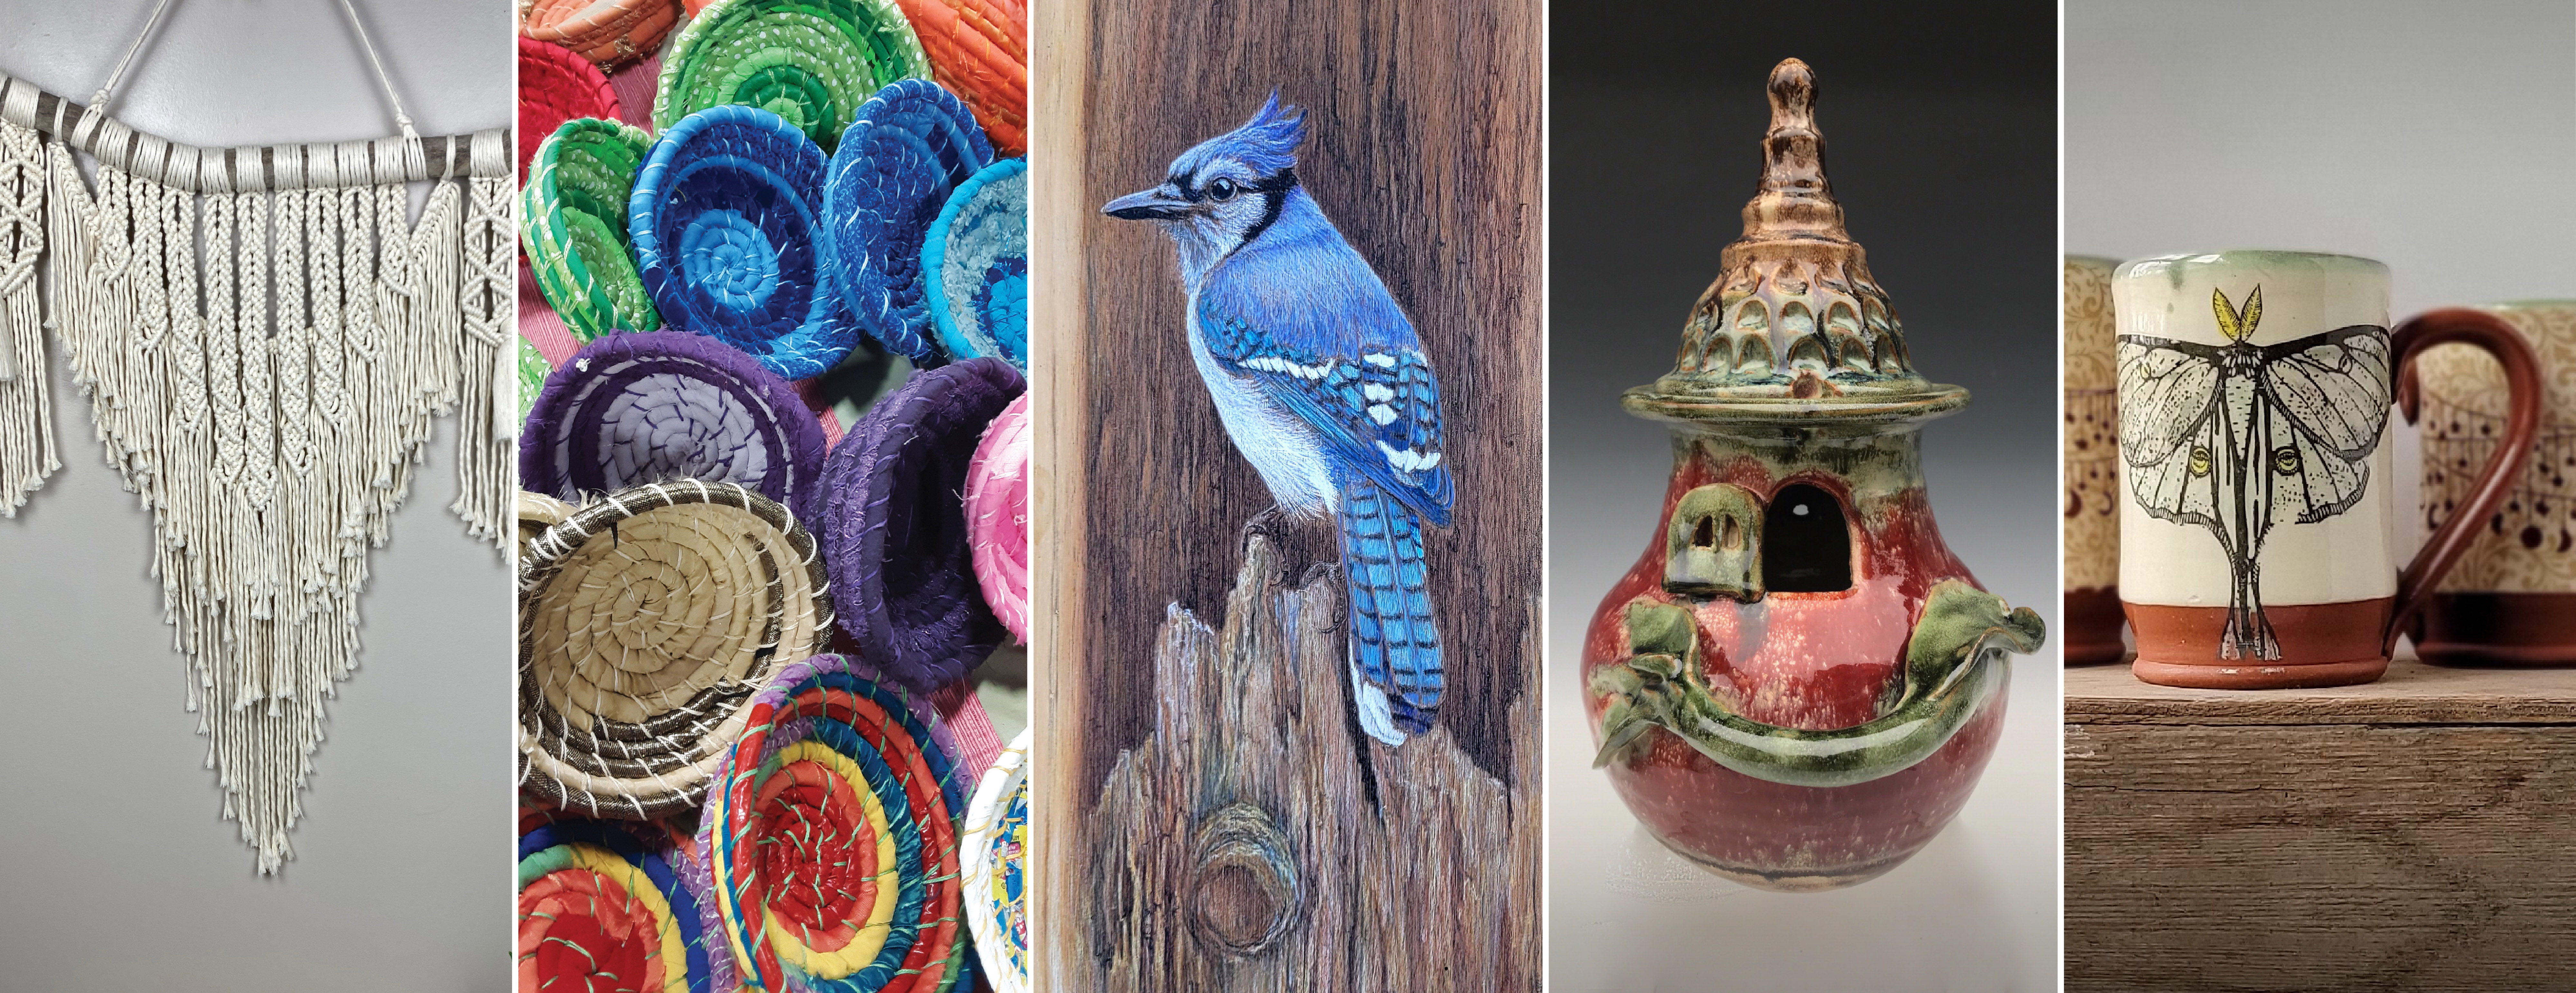 Collage of handmade artist market items